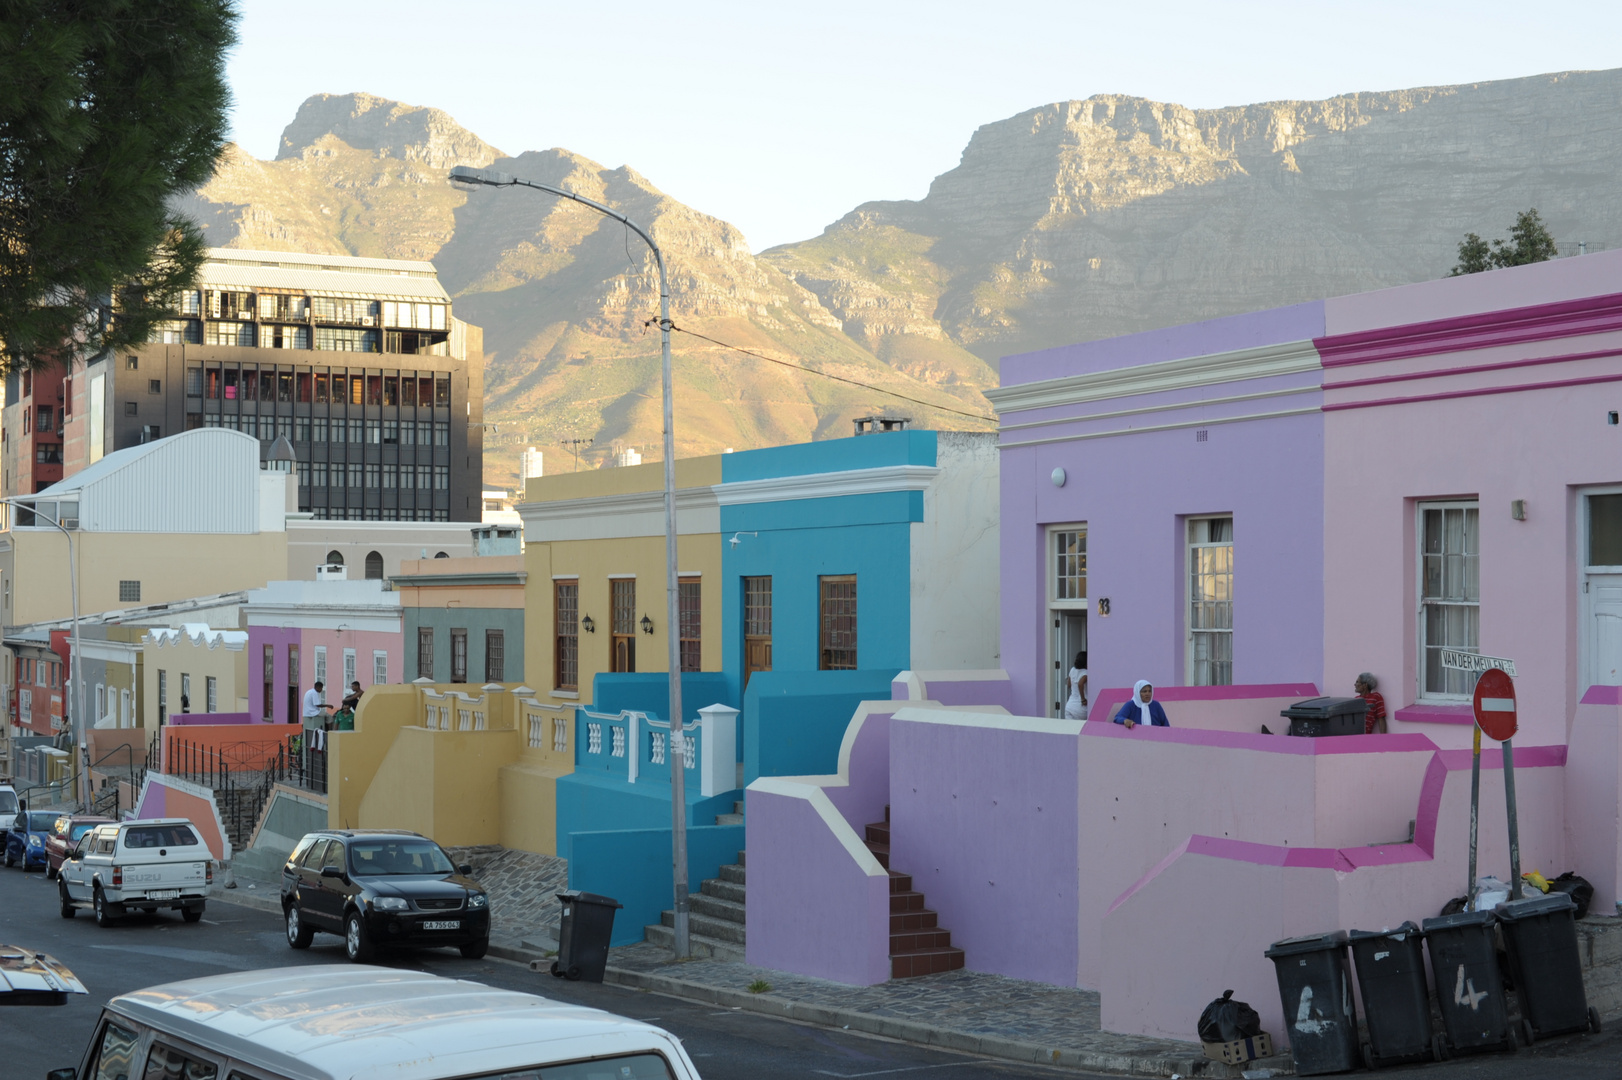 Cape Town, Bo Kaap, streetview and Table Mountain